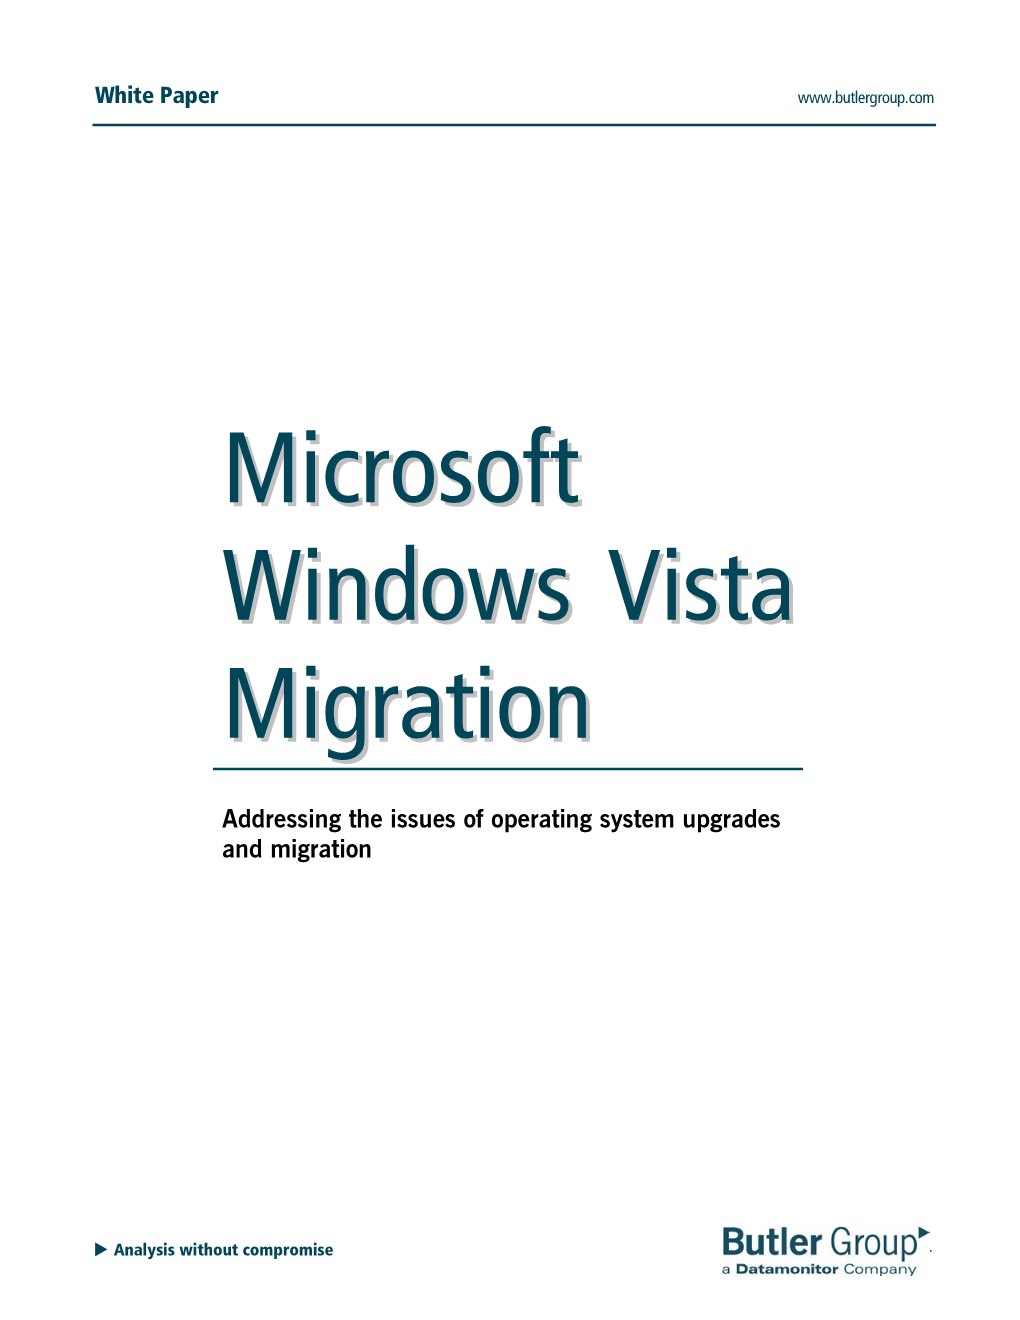 Microsoft Windows Vista Migration © Butler Direct Limited White Paper